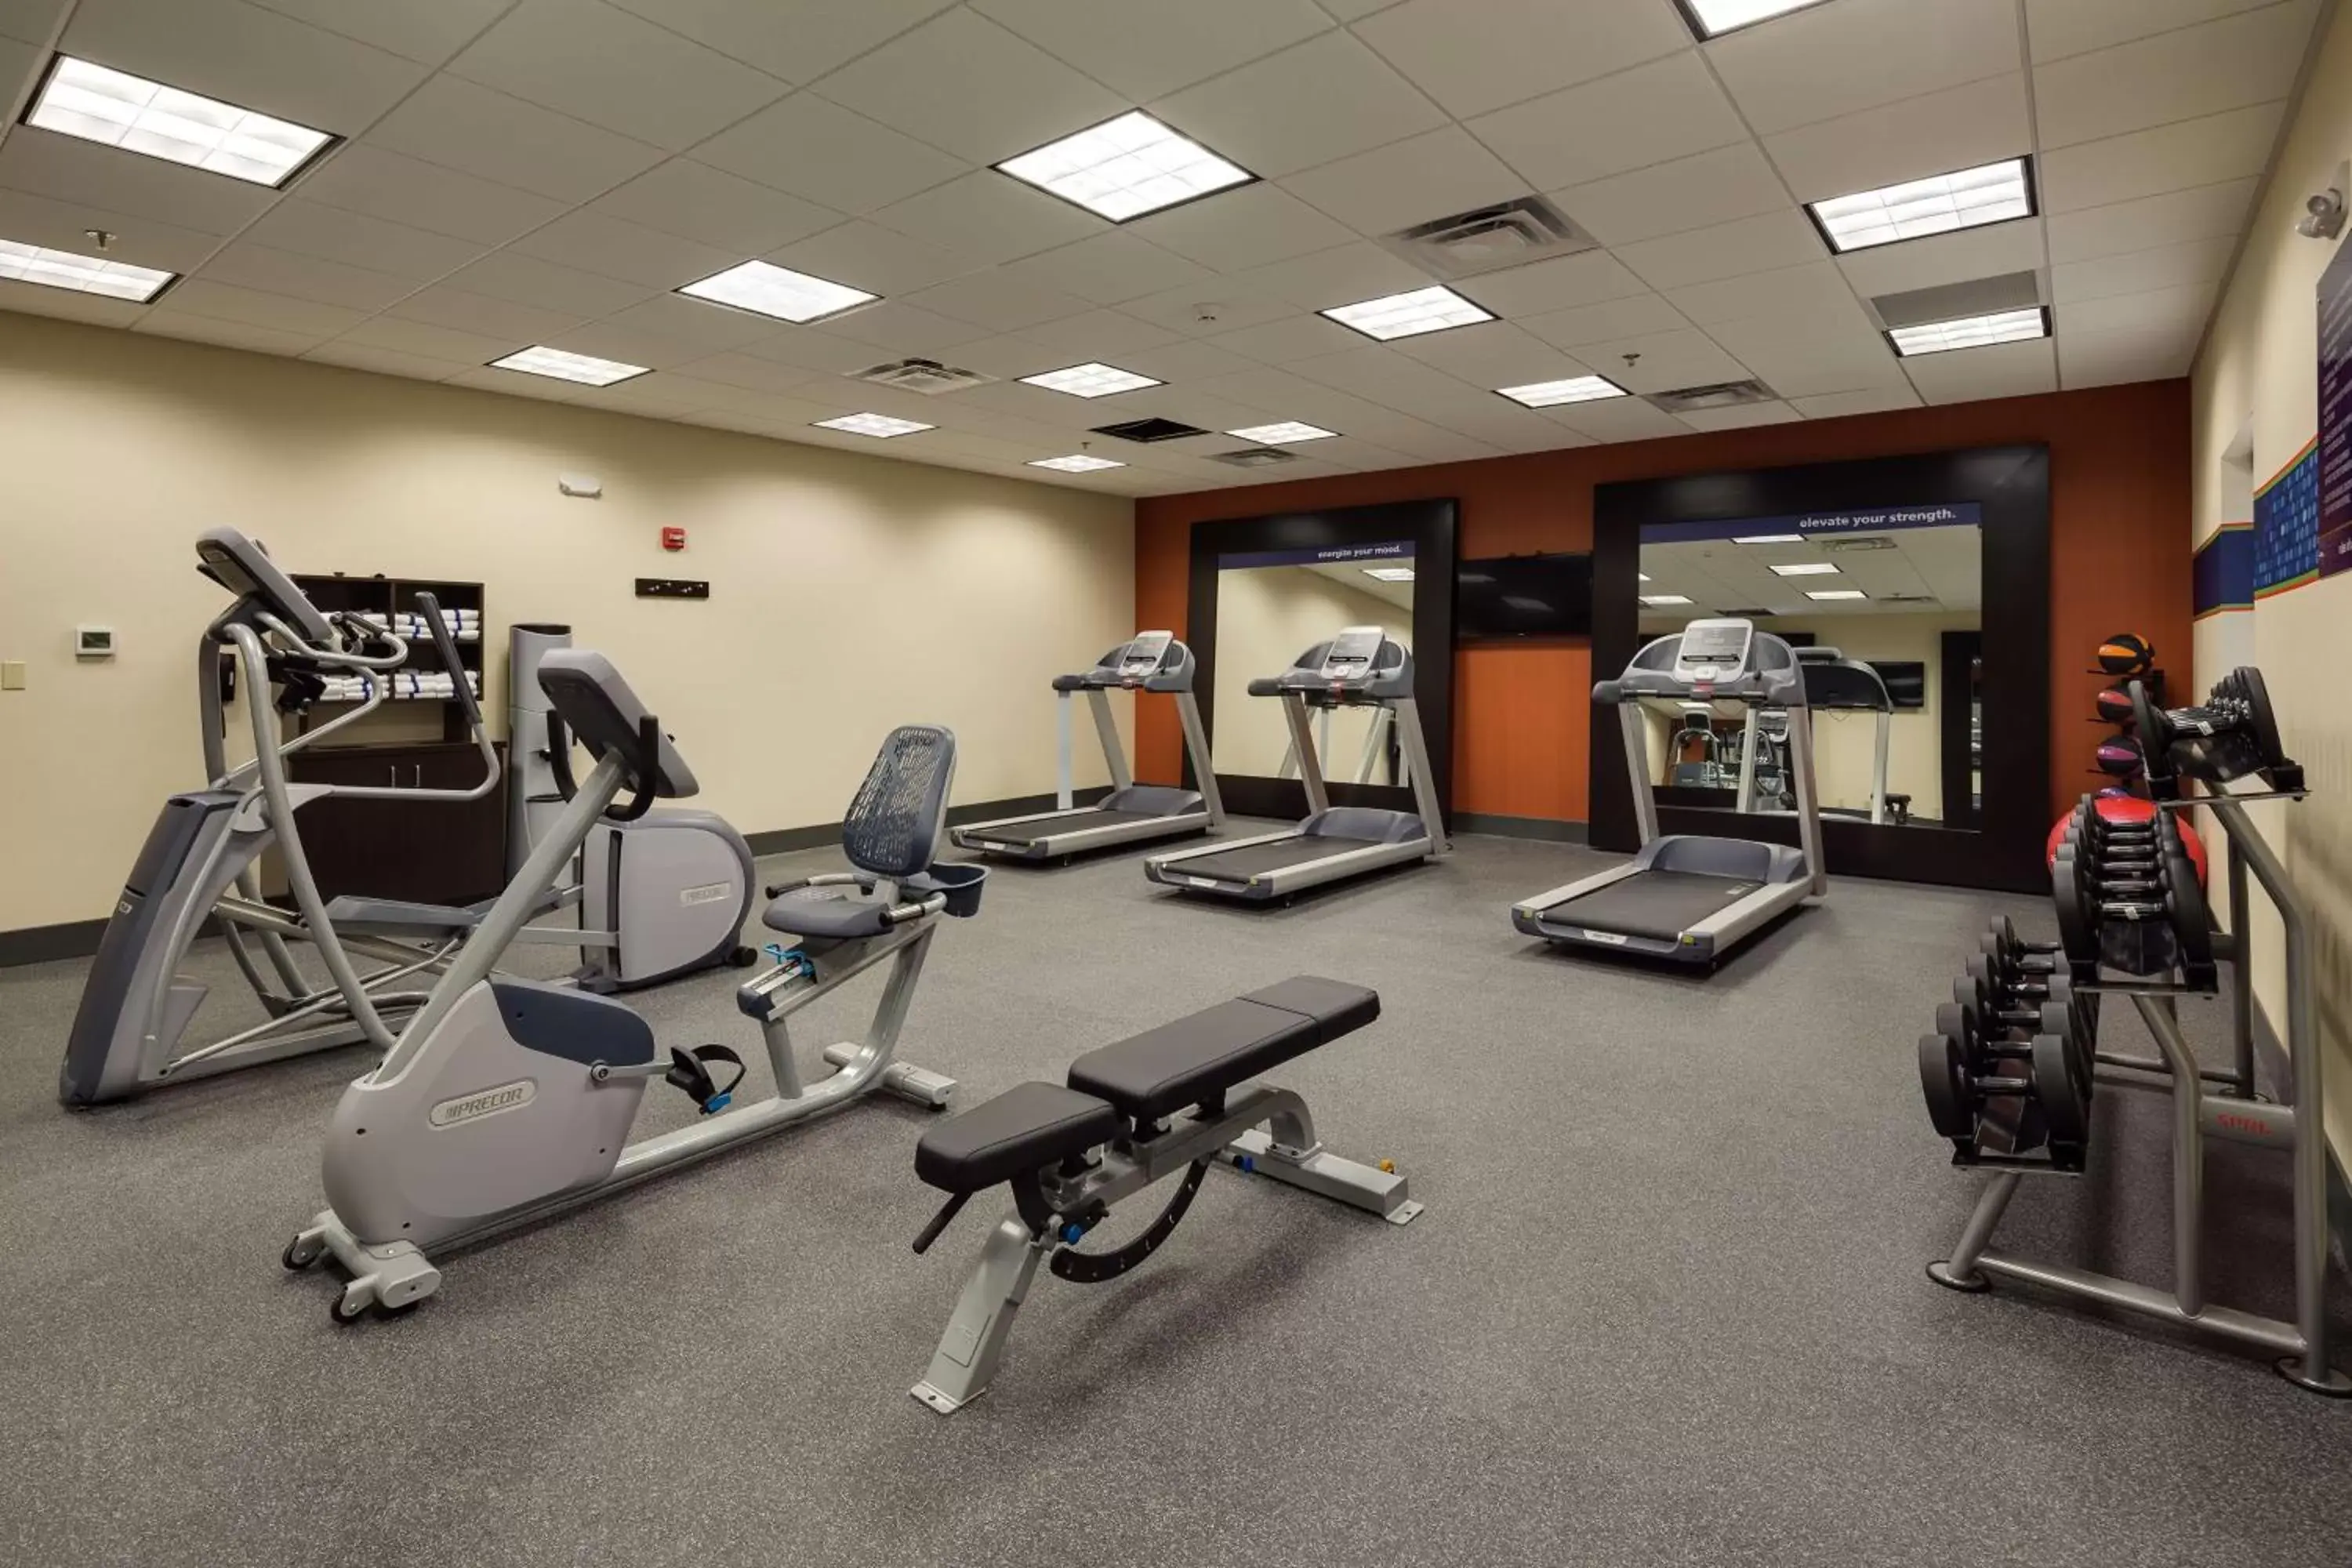 Fitness centre/facilities, Fitness Center/Facilities in Hampton Inn Morristown, I-81, TN